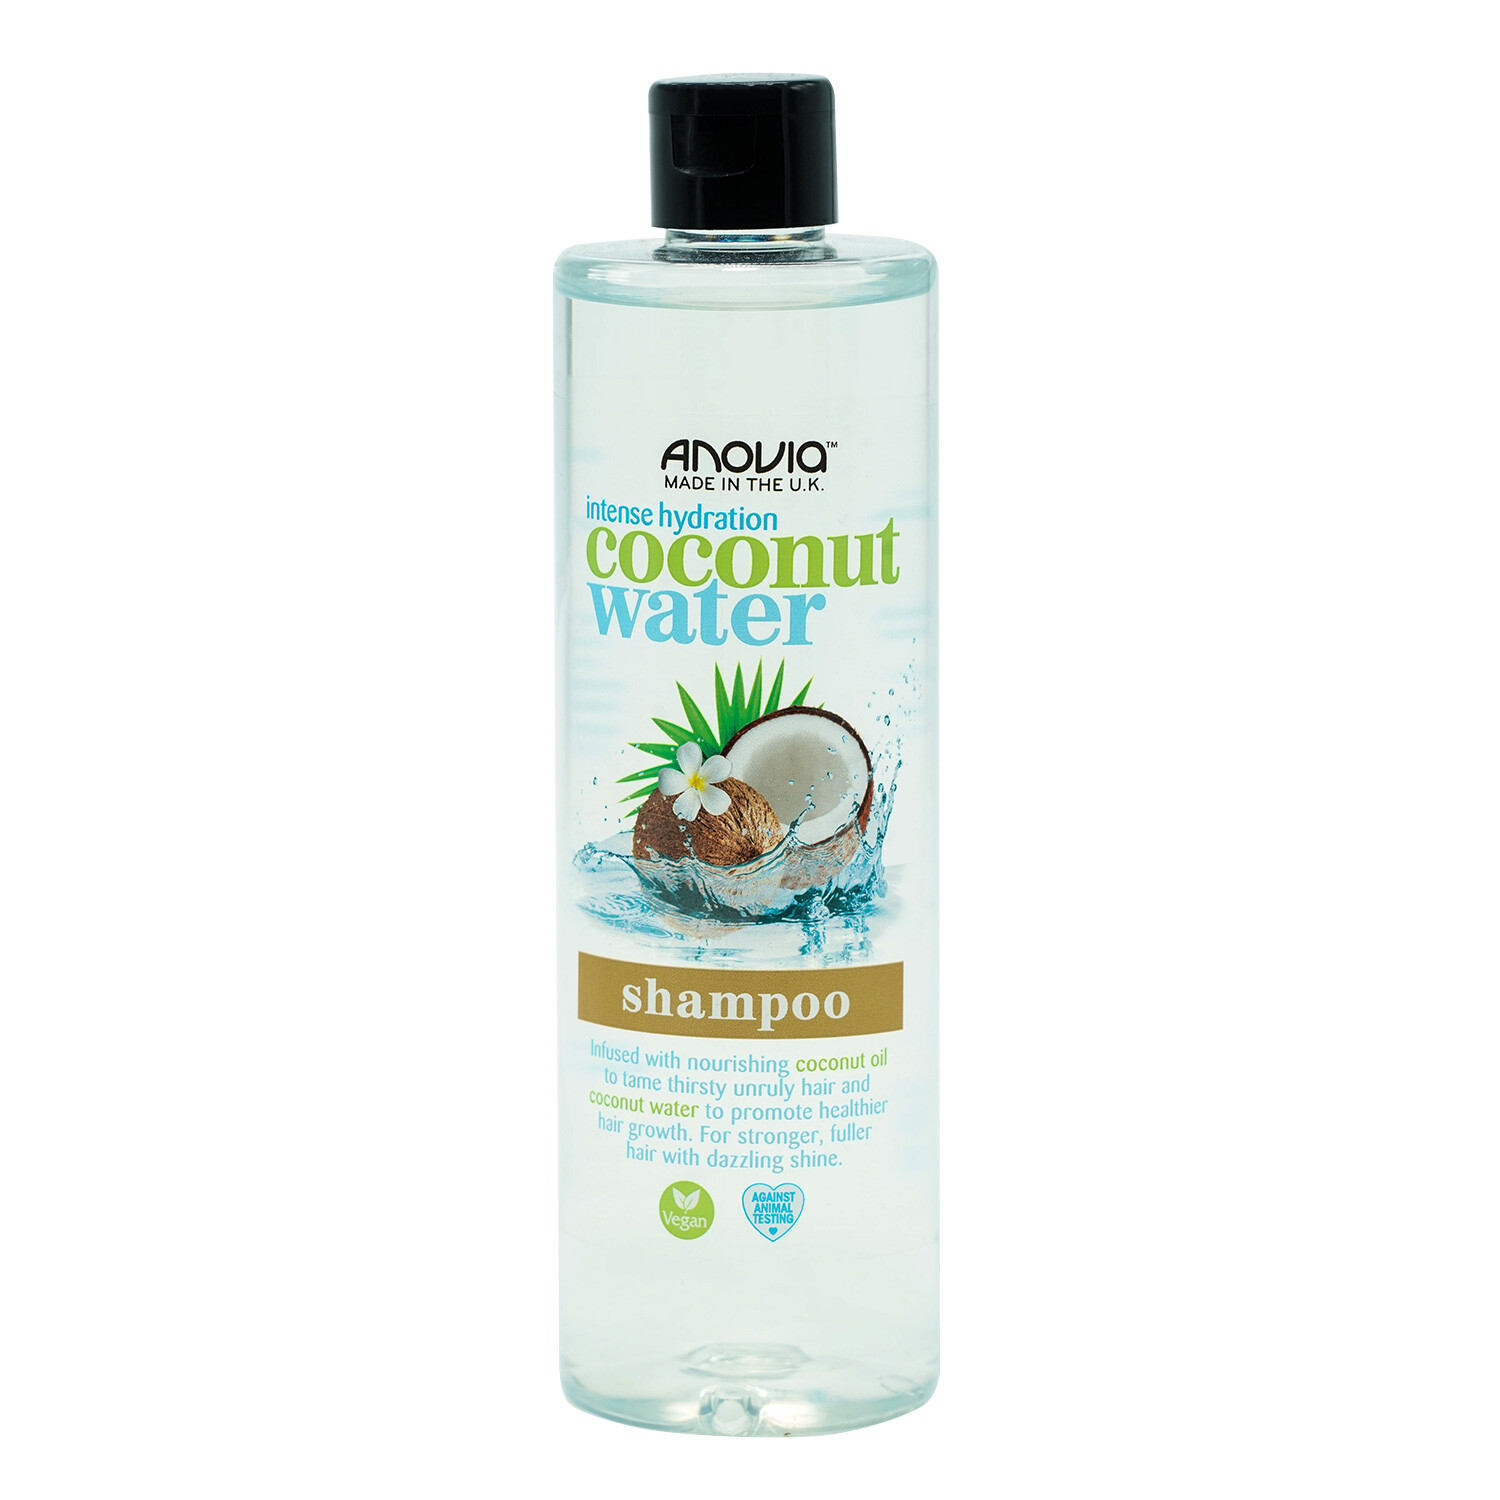 Anovia Intense Hydration Coconut Water Shampoo - Clear Image